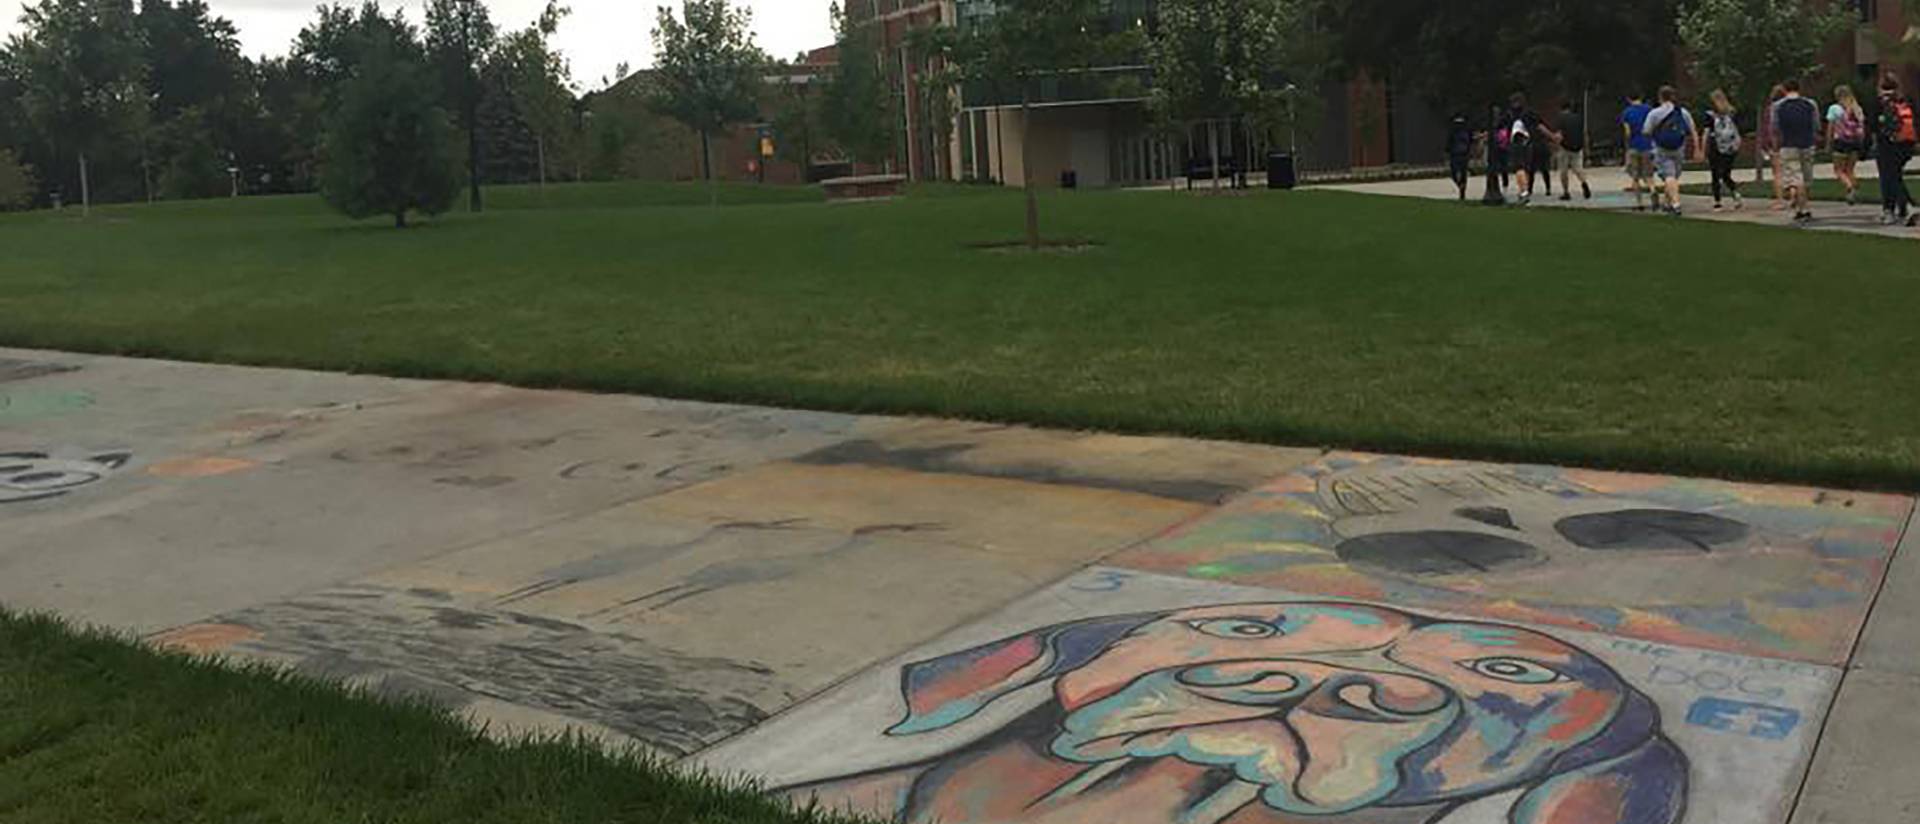 Chalk art on the sidewalks fades away after a week of rain.